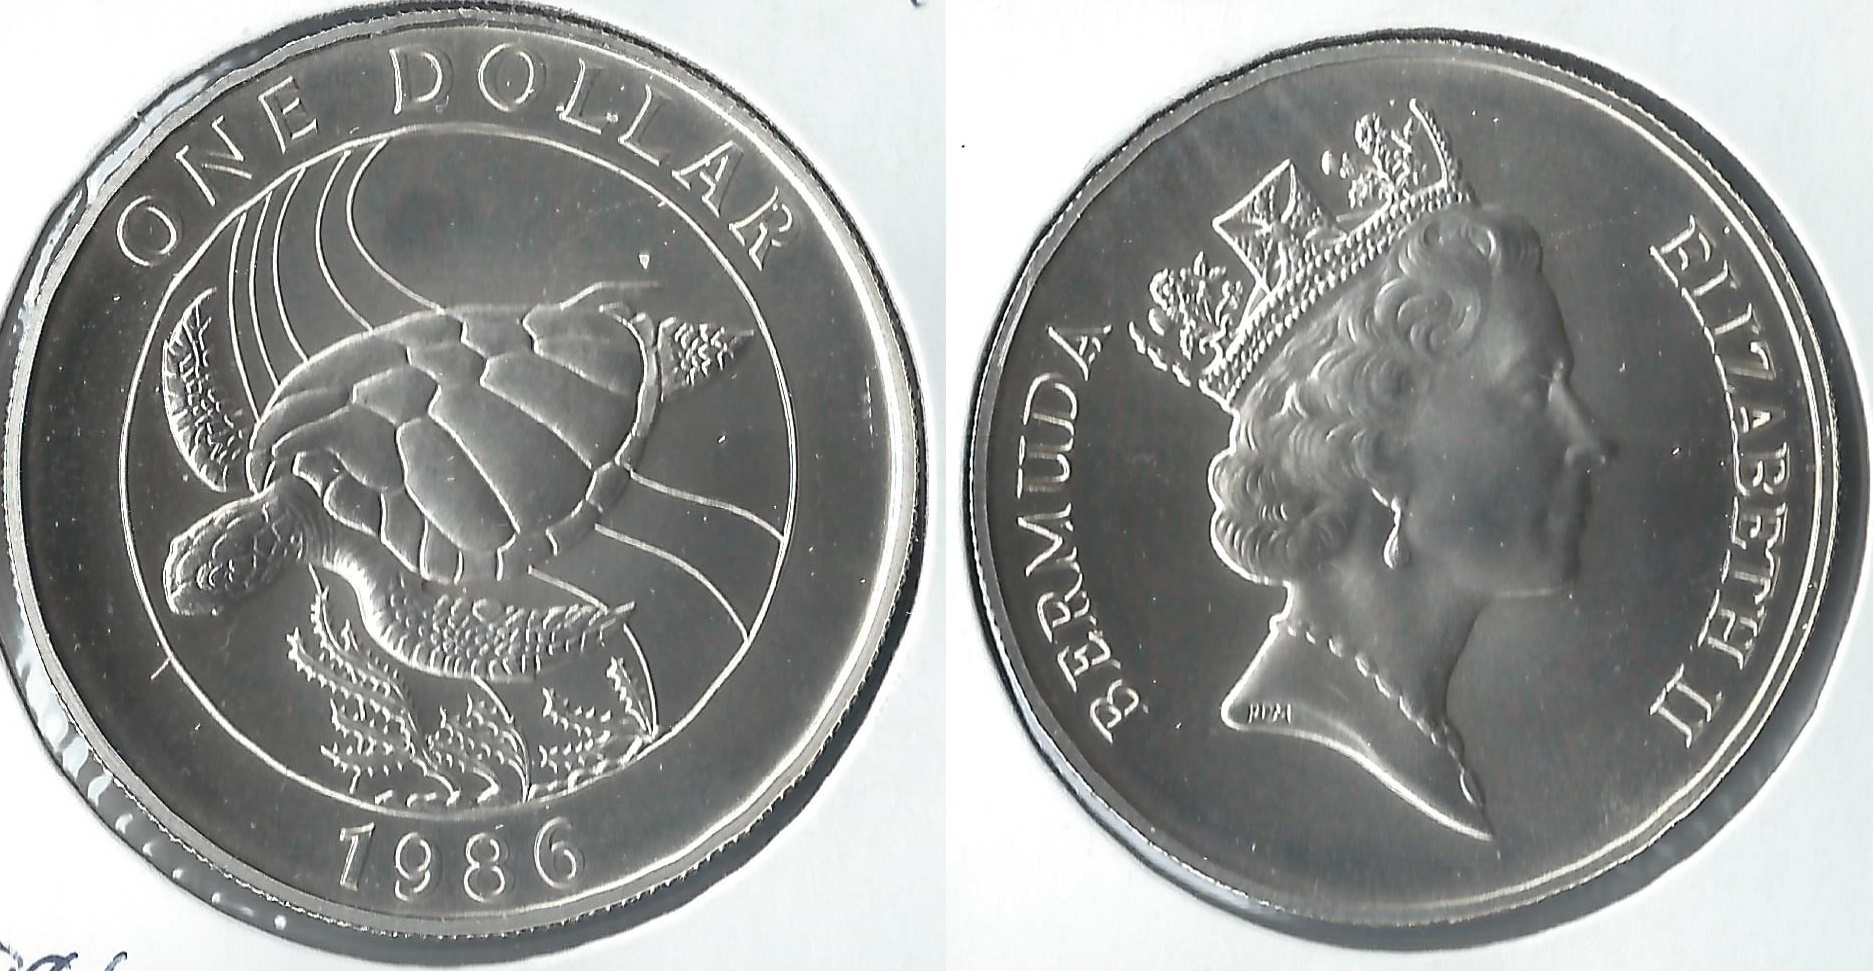 1986 bermuda 1 dollar.jpg